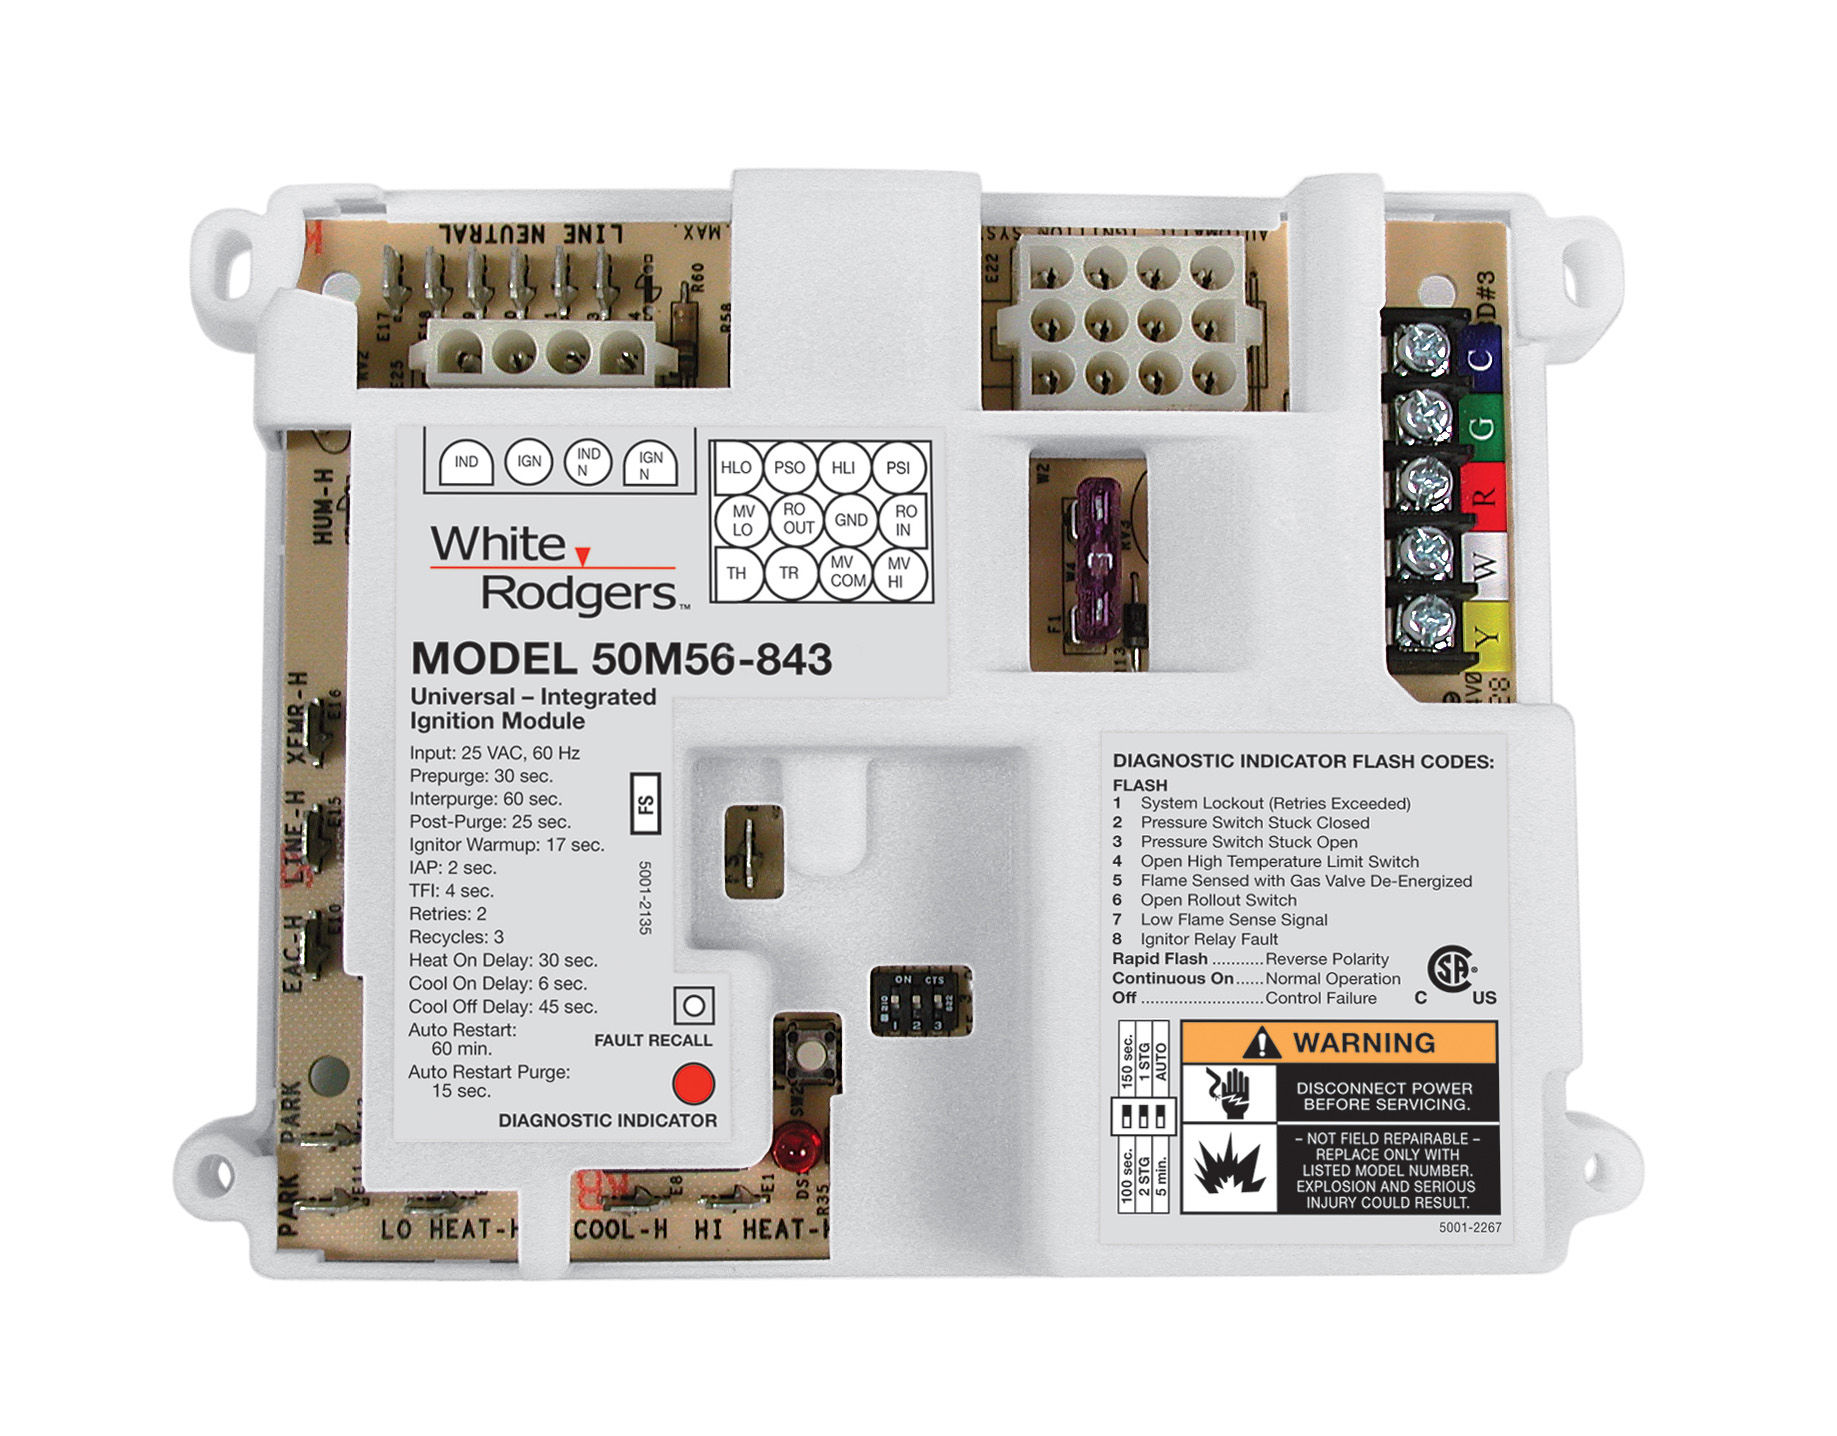 White Rodgers 21M51U-843 Ignition Module/Circulator Furnace Control Kit with ...